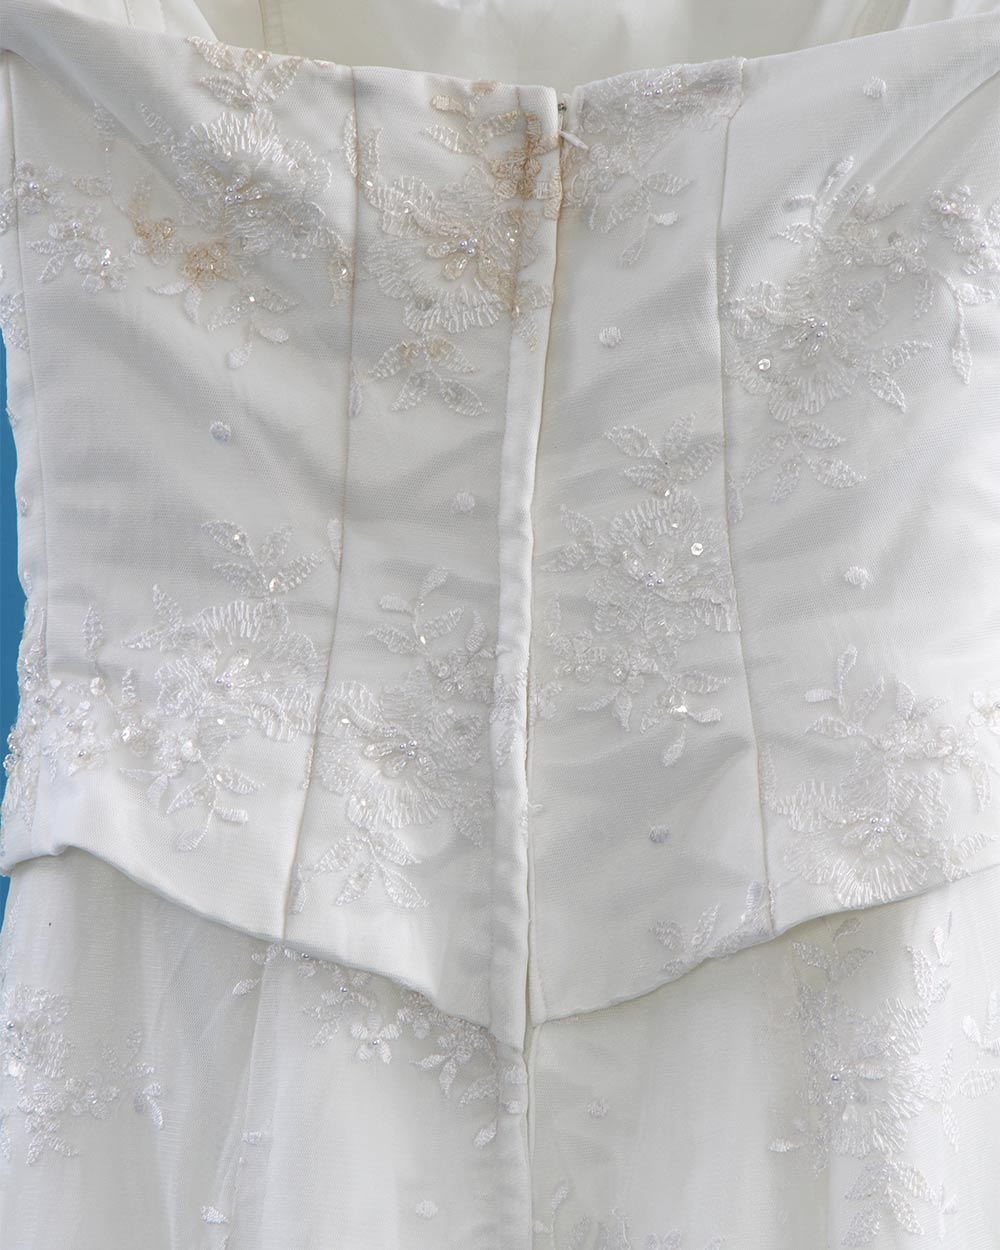 Ivory Strapless Fishtail Wedding Dress